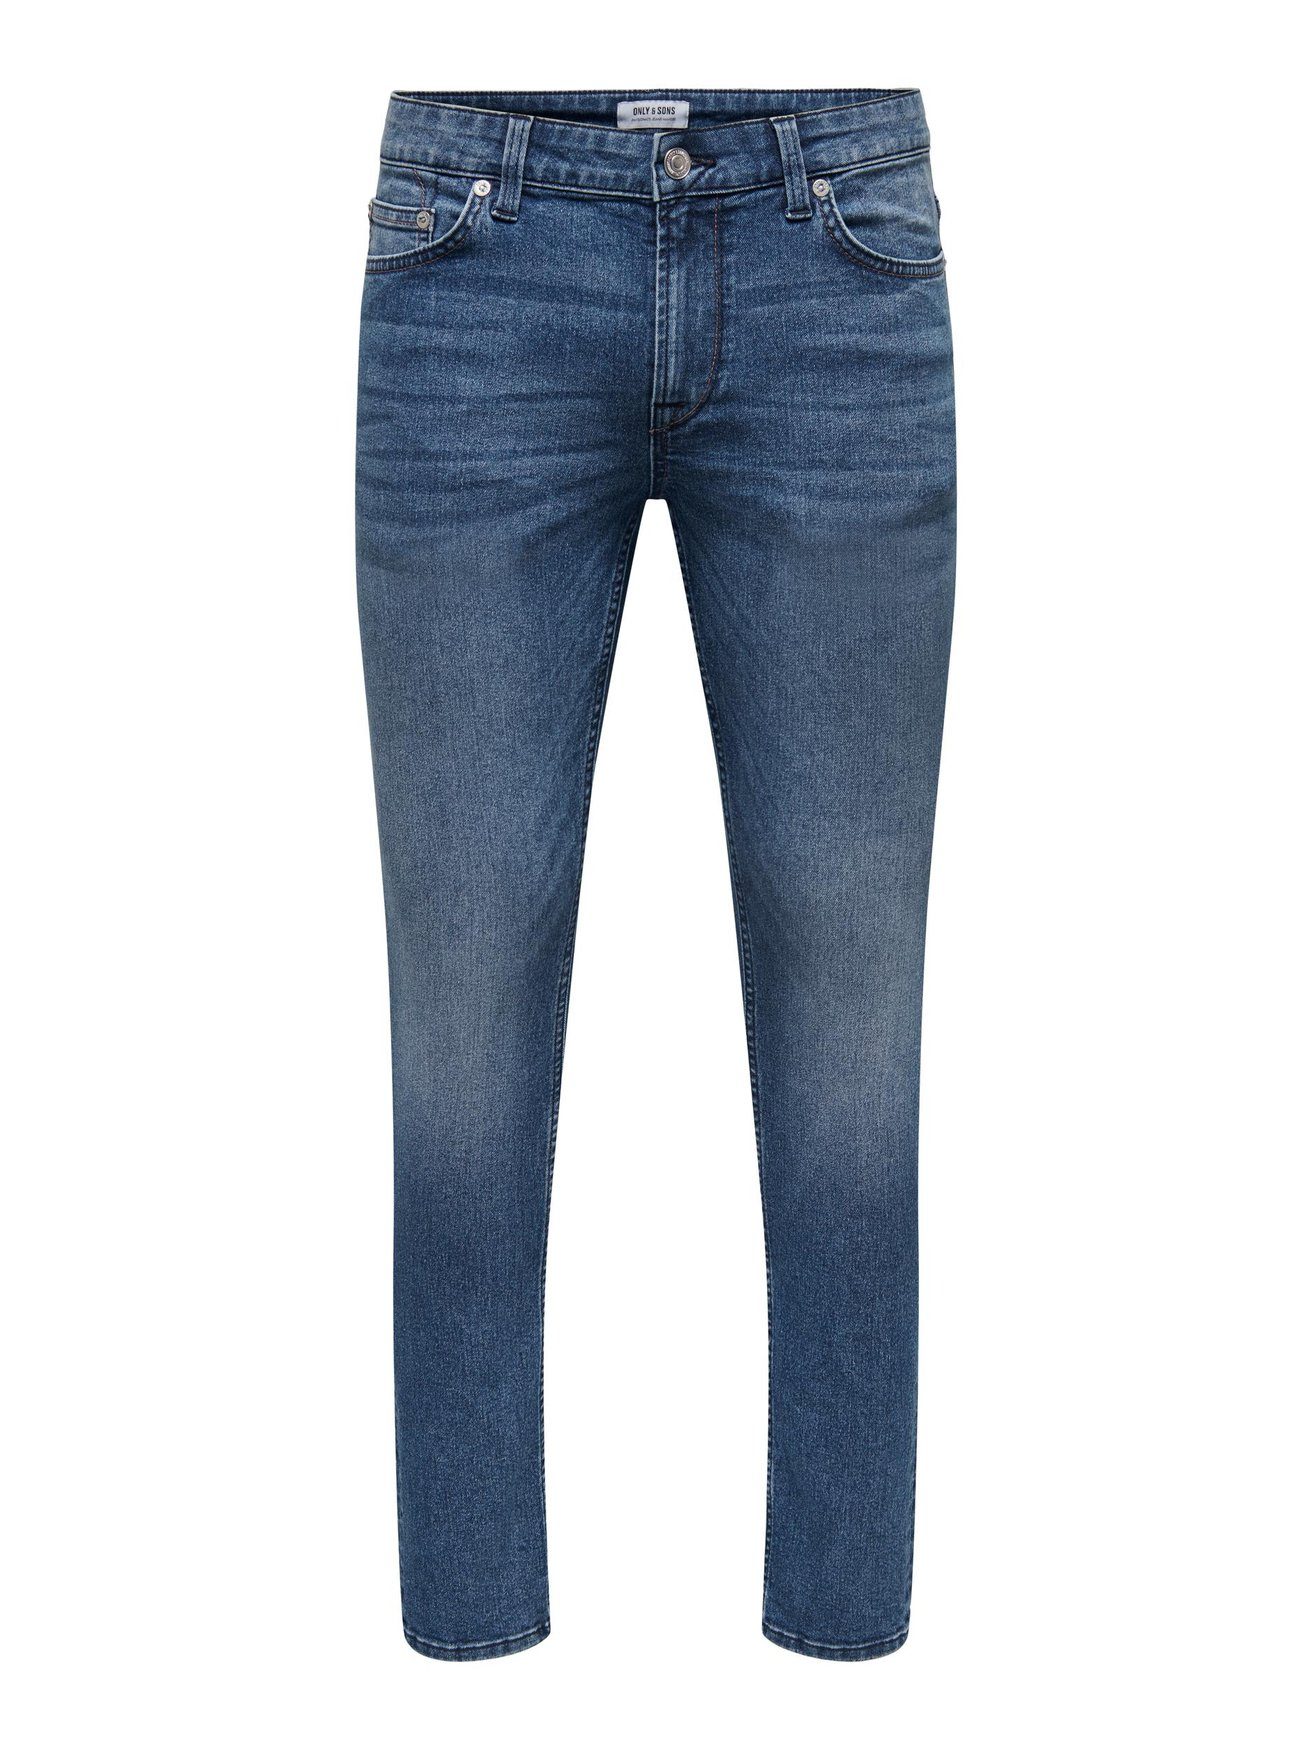 ONLY & SONS Slim-fit-Jeans Slim Fit Jeans Basic Hose Stoned Washed Denim Pants ONSLOOM 5615 in Blau | Slim-Fit Jeans